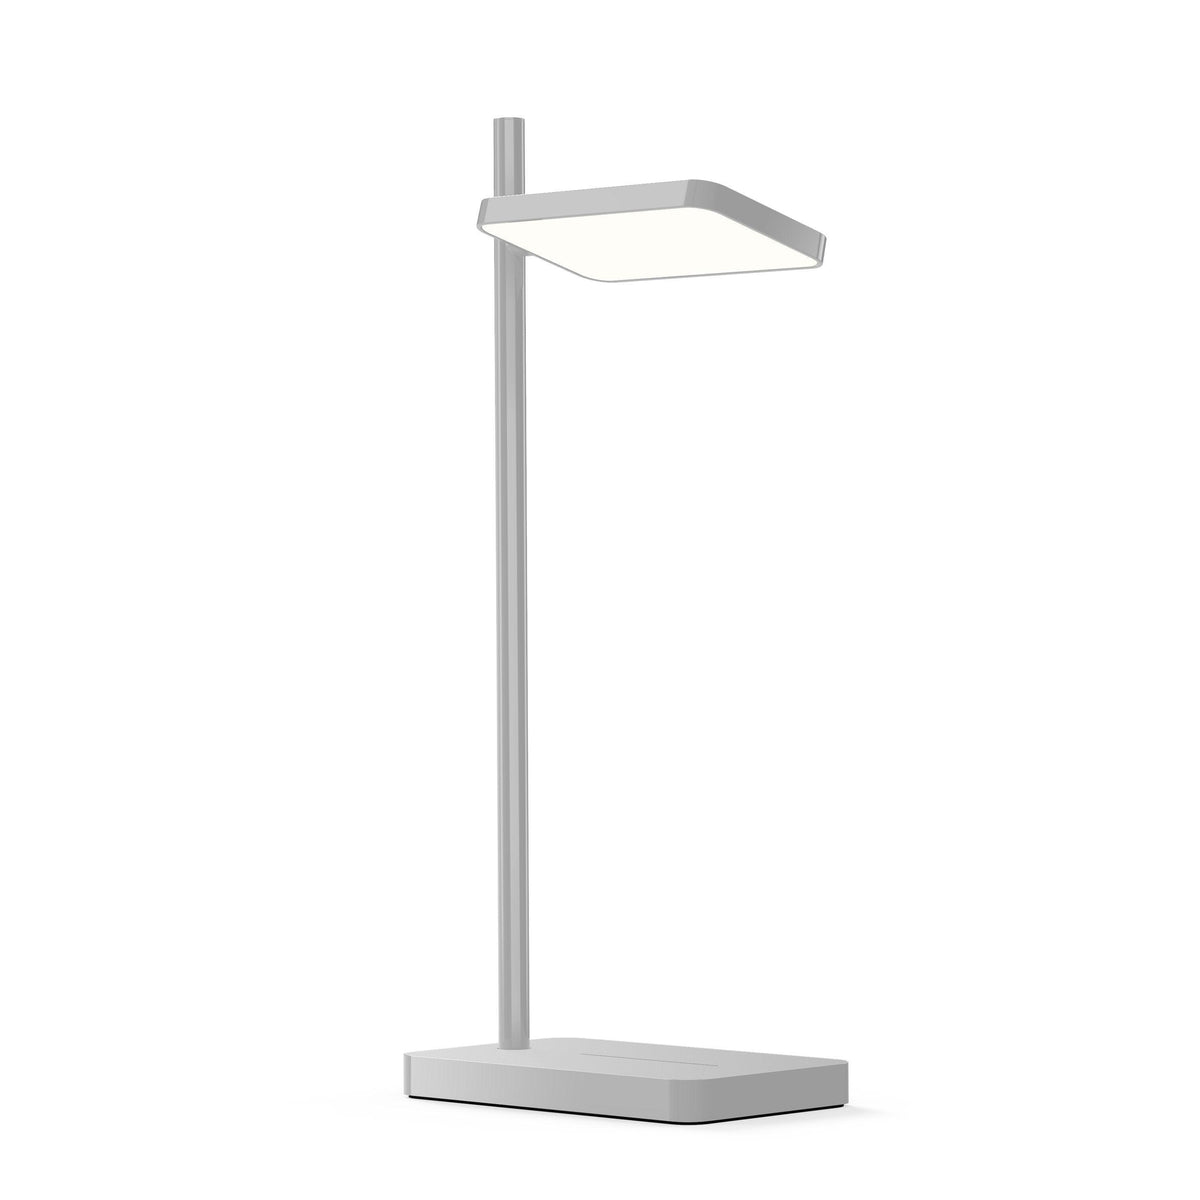 Pablo Designs - Talia Table Lamp - TALI TBL GRY | Montreal Lighting & Hardware